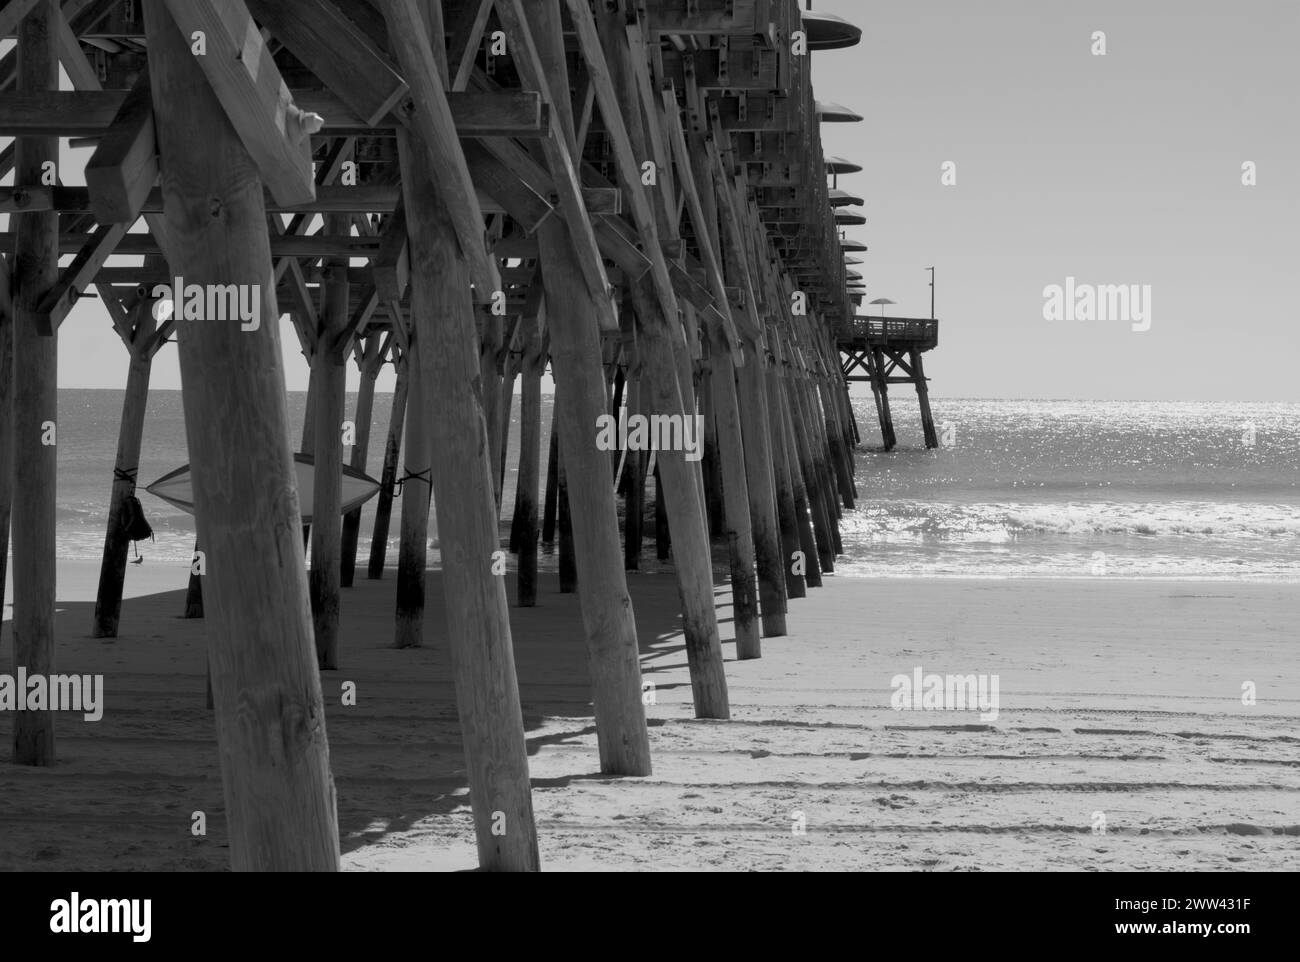 Stock photo of the Garden City Pier near Myrtle Beach, South Carolina, USA. Stock Photo